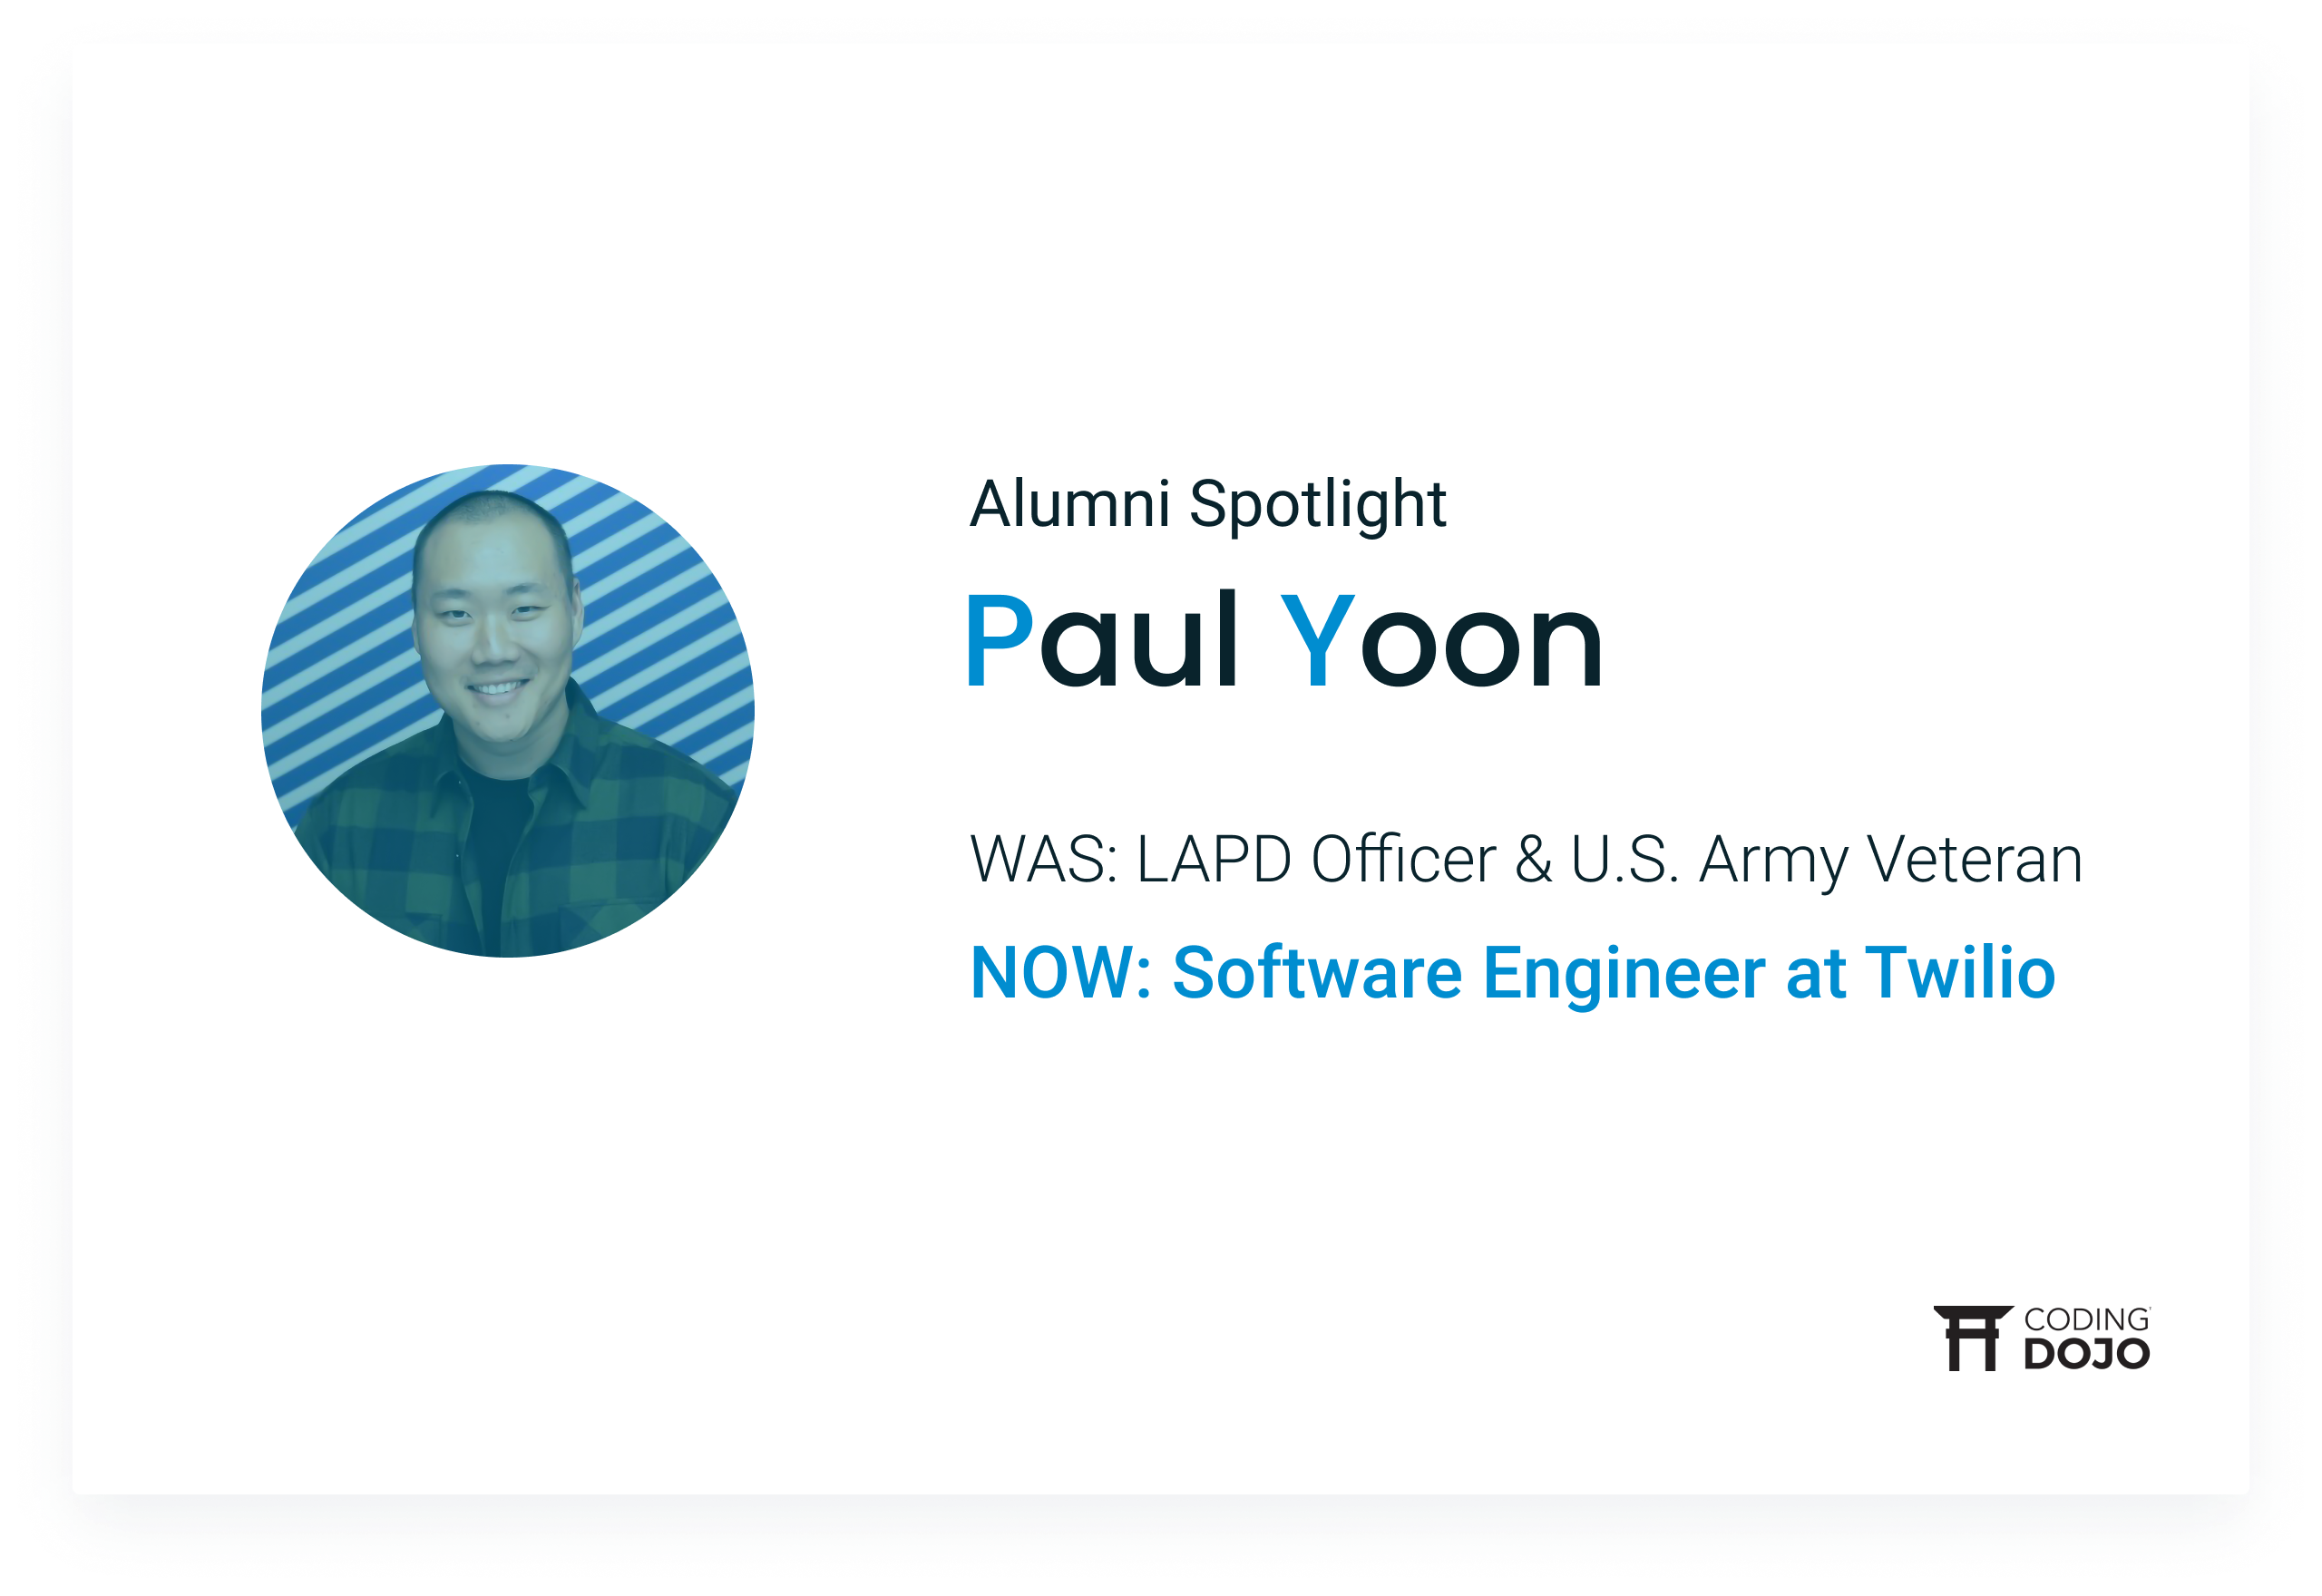 Coding Dojo Alumni Success | Paul Yoon